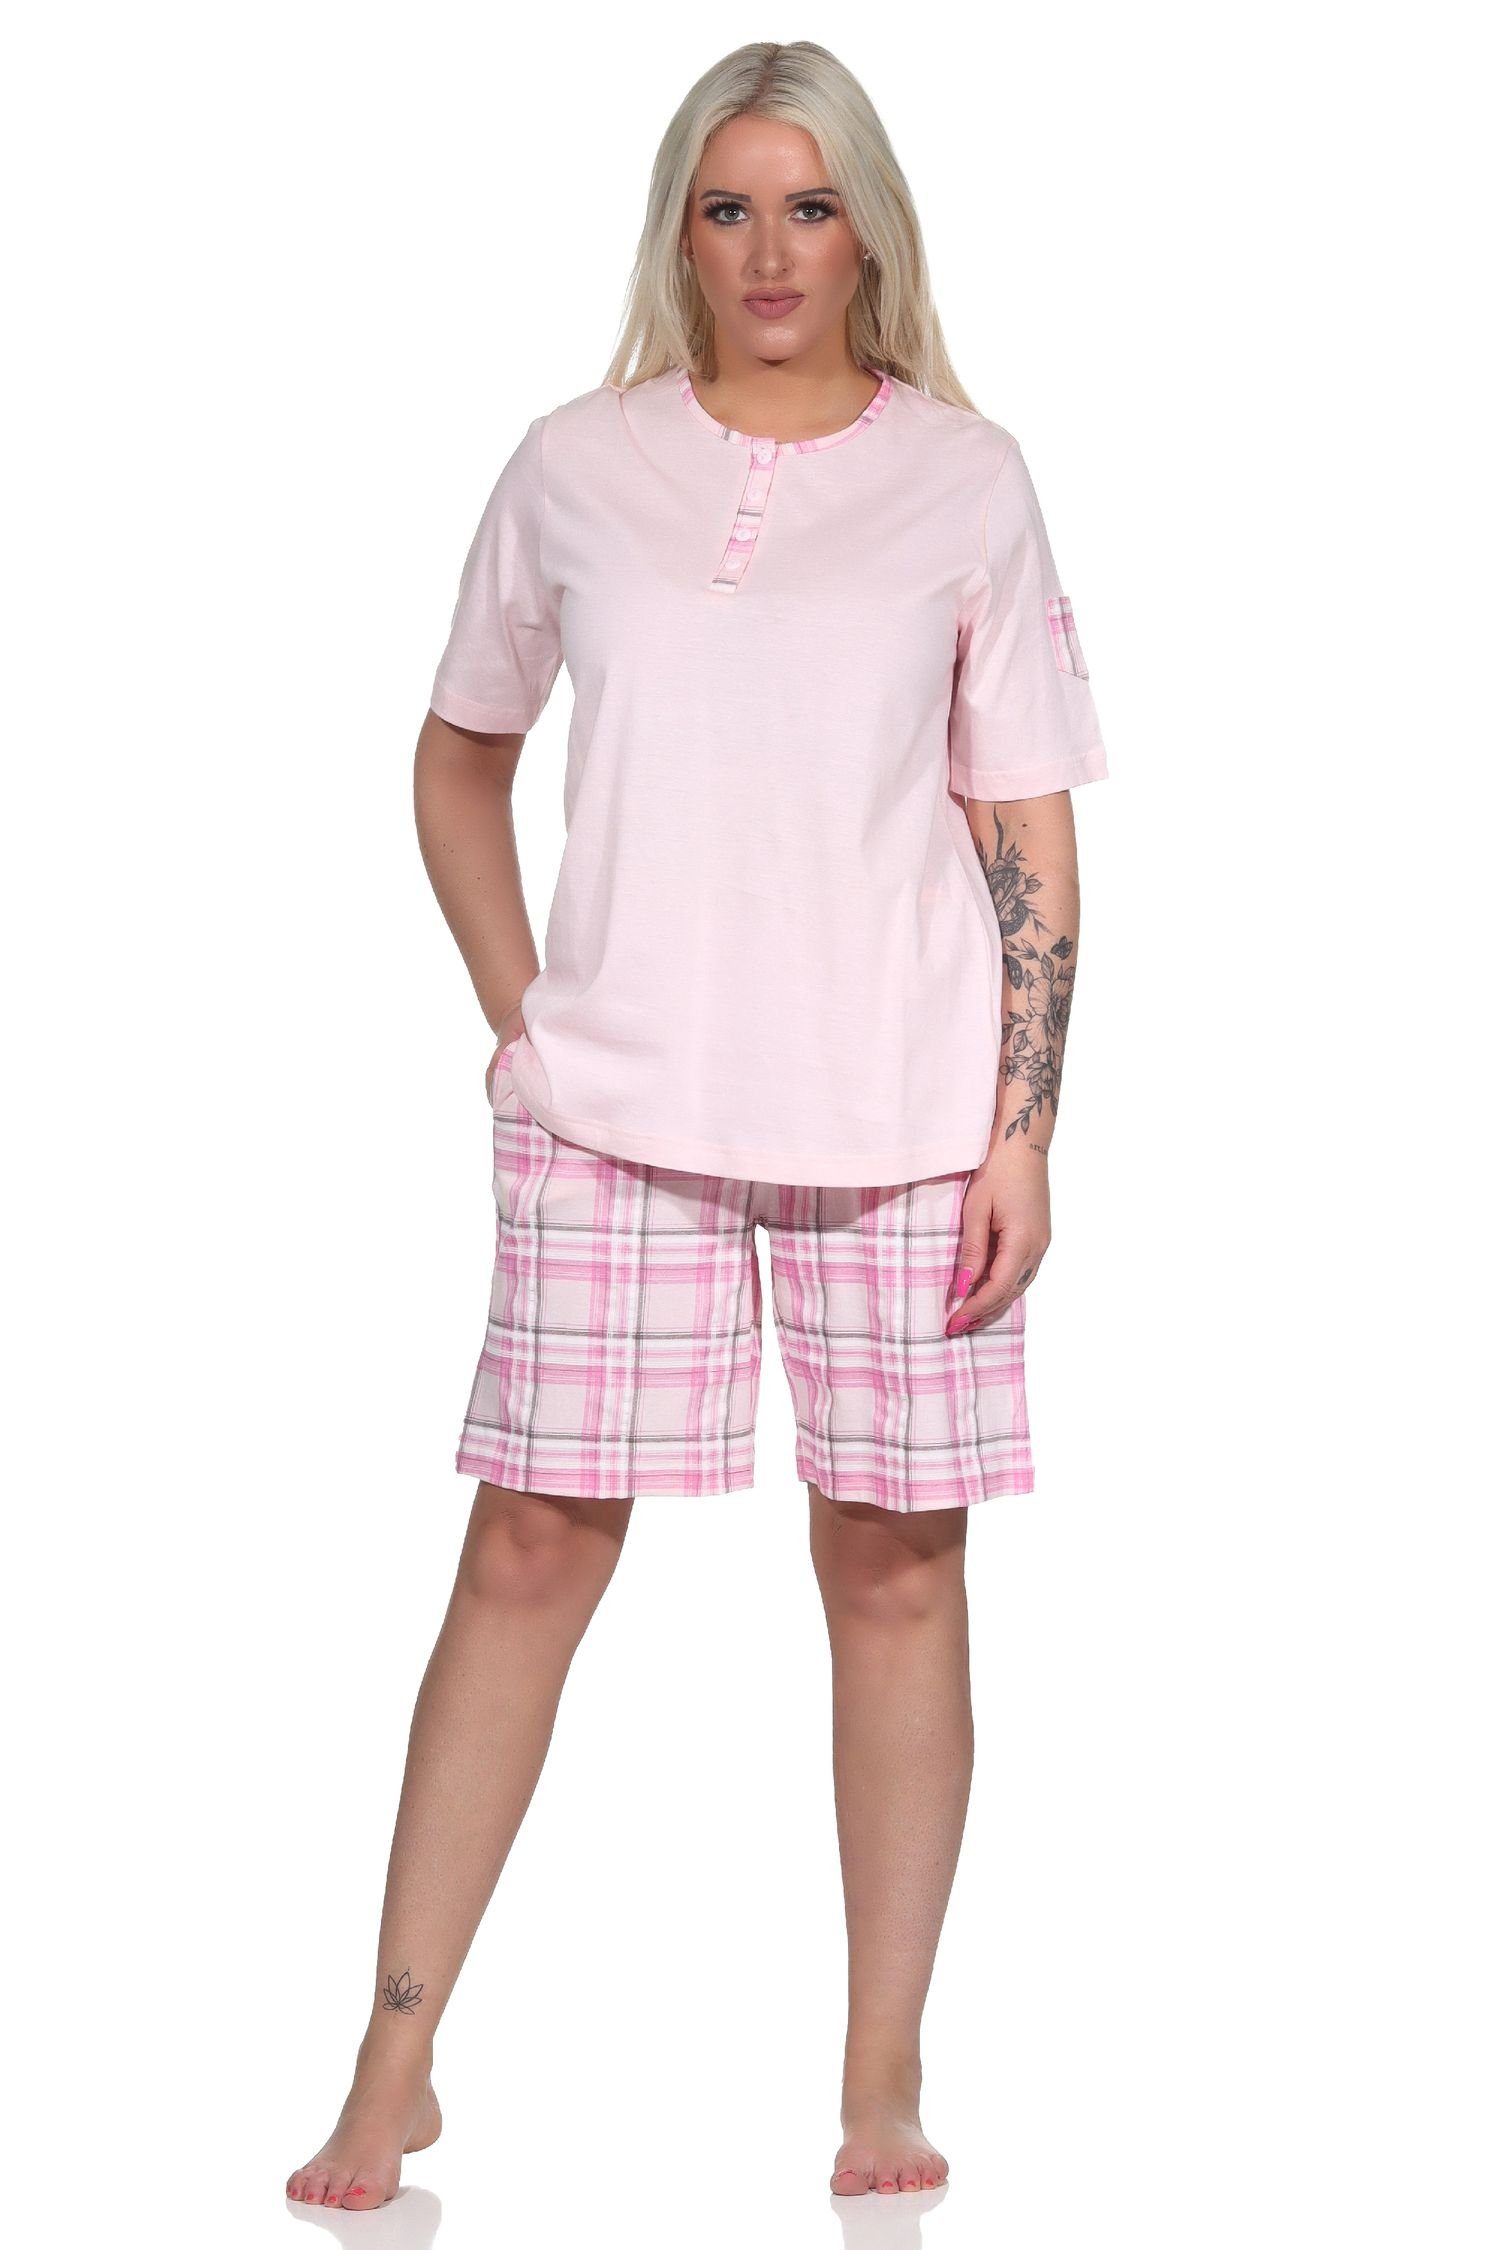 Schlafanzug Shorty karierter Pyjama Jersey mit kurzarm Hose Normann Damen aus rosa